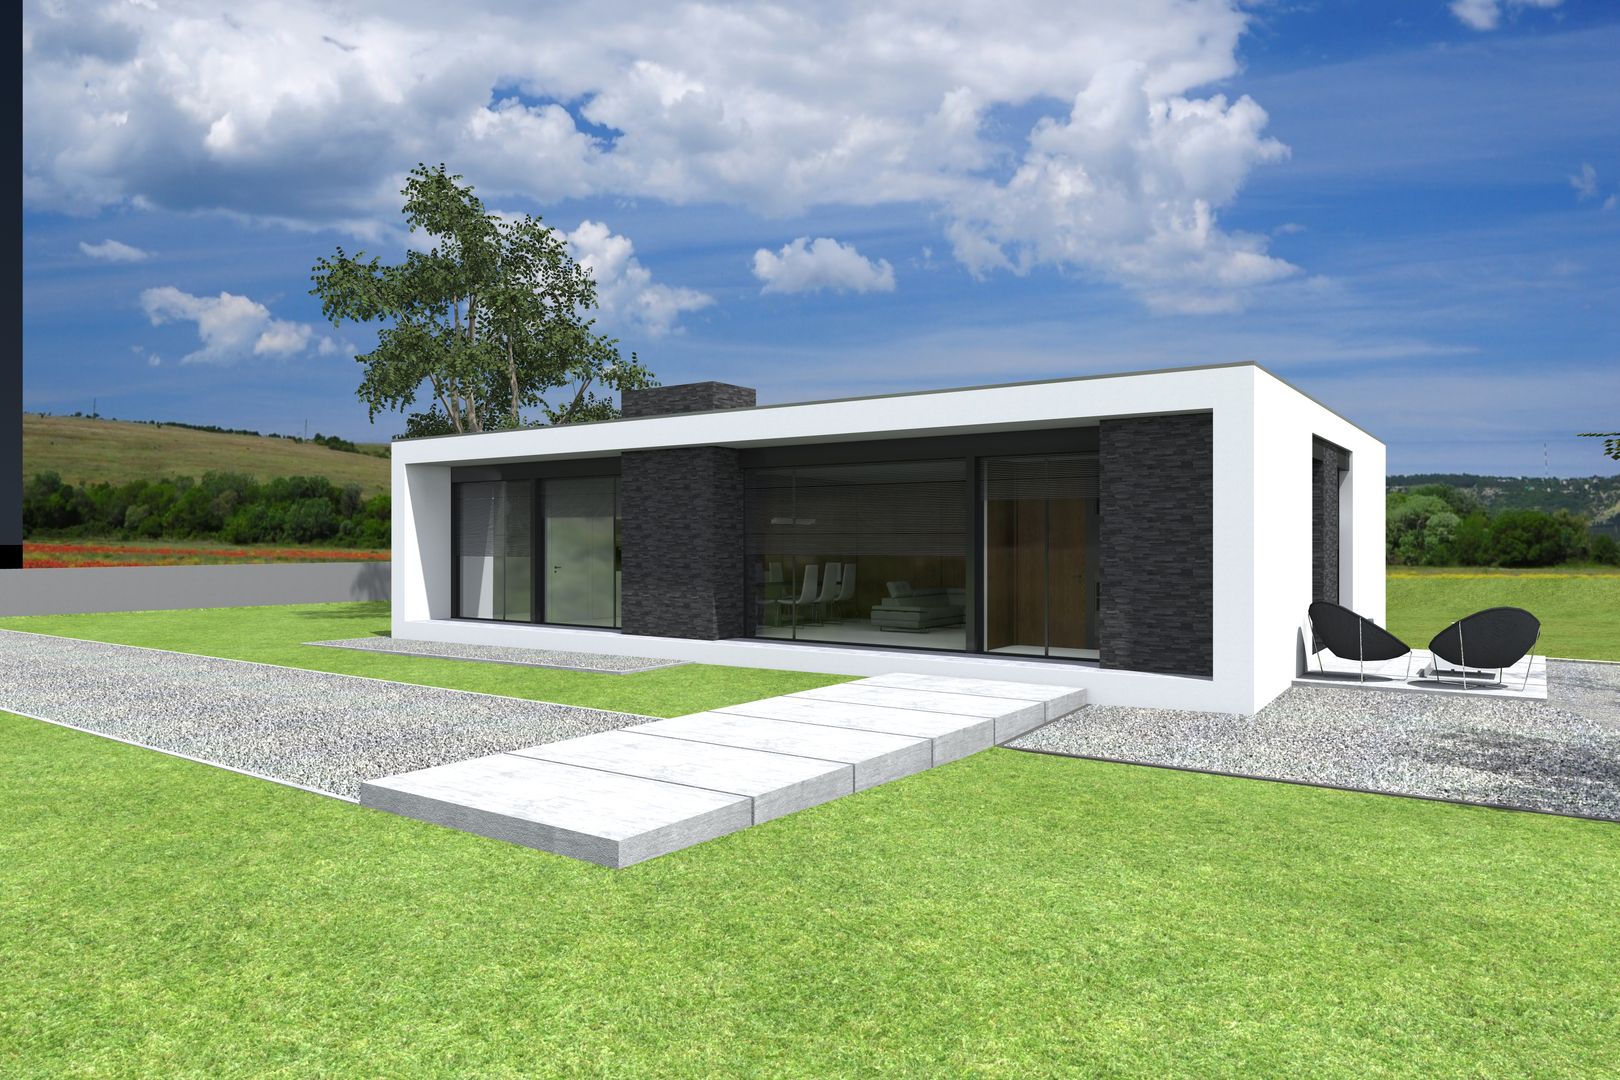 Projeto Quartzo, Magnific Home Lda Magnific Home Lda 現代房屋設計點子、靈感 & 圖片